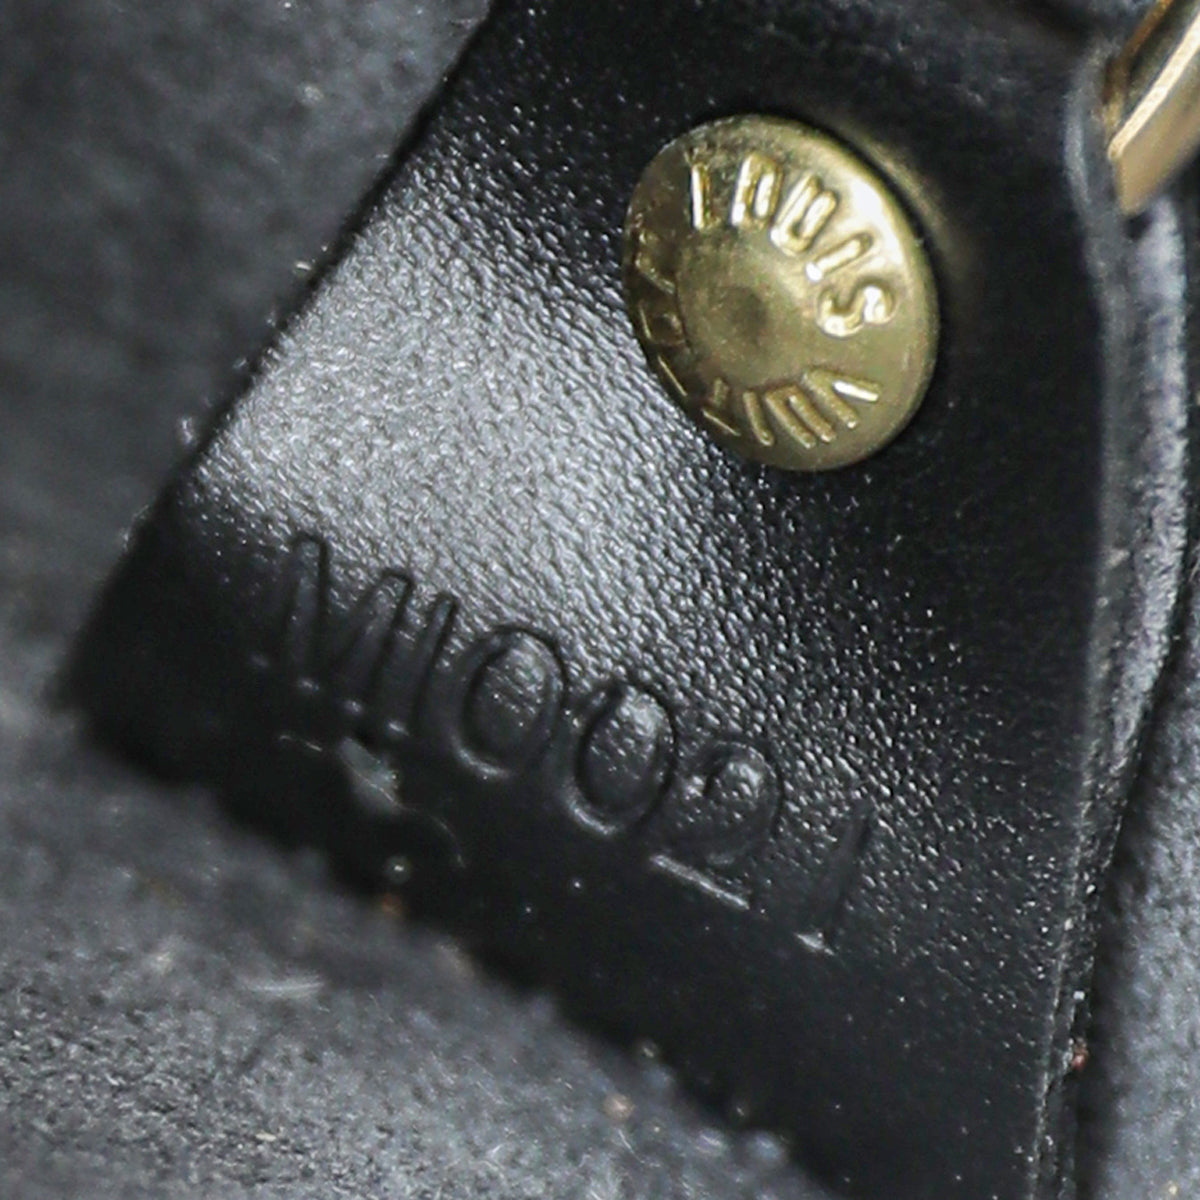 Louis Vuitton Black Soufflot Bag